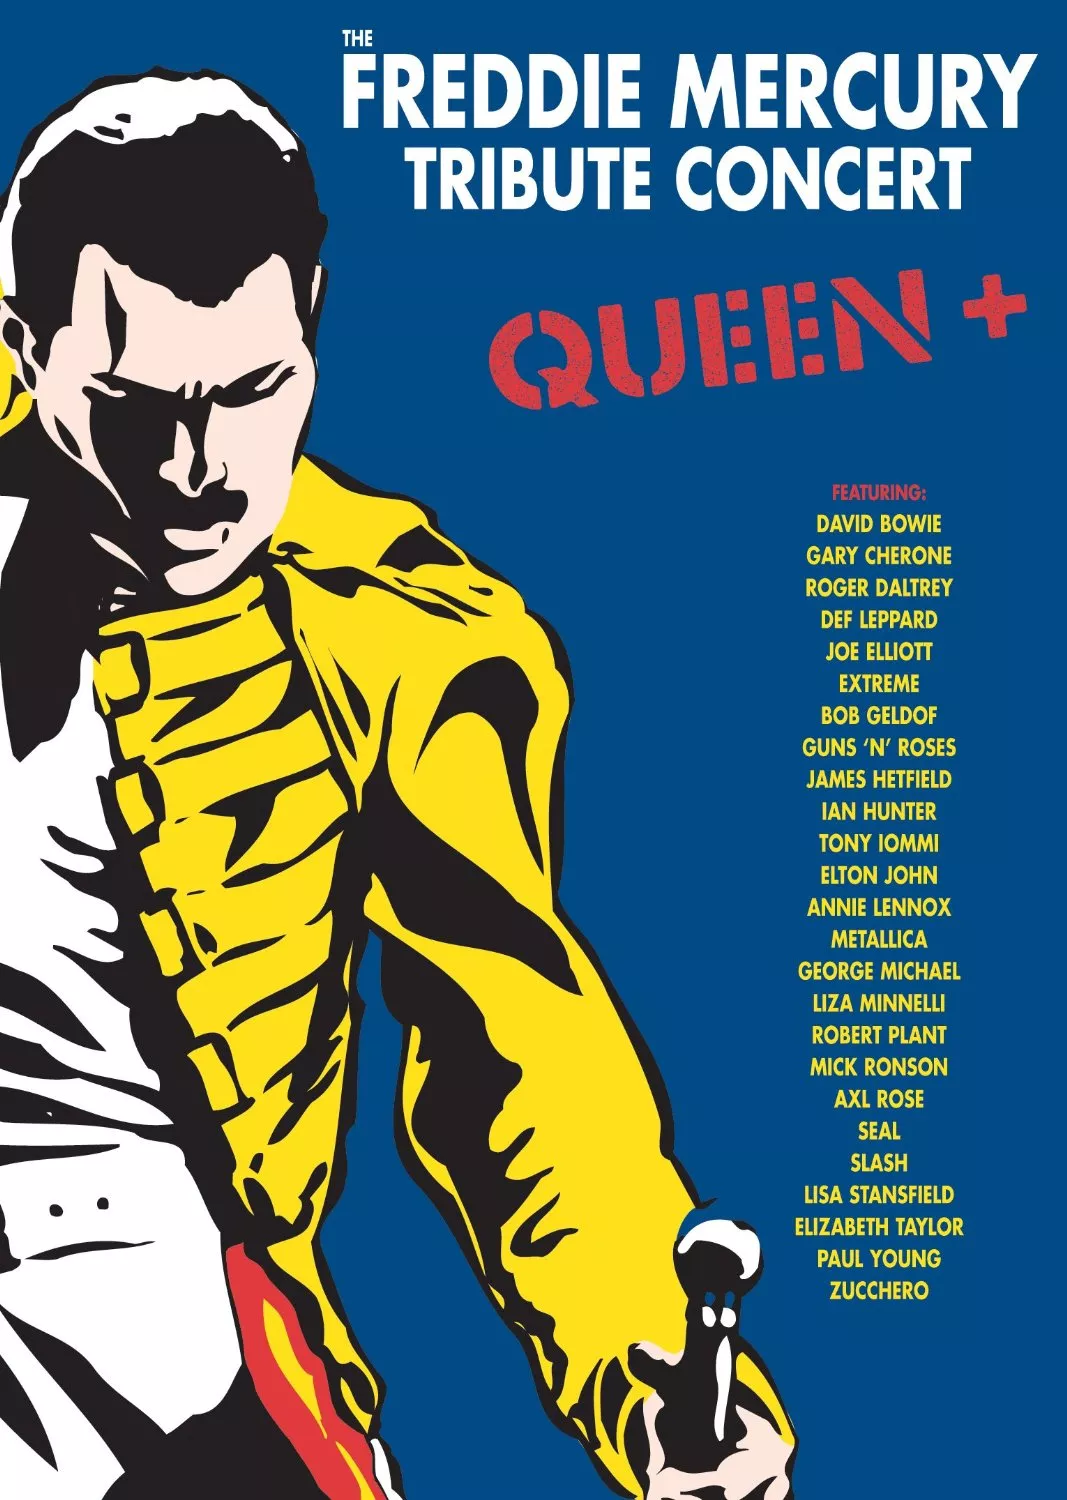 The Freddie Mercury Tribute Concert - Queen